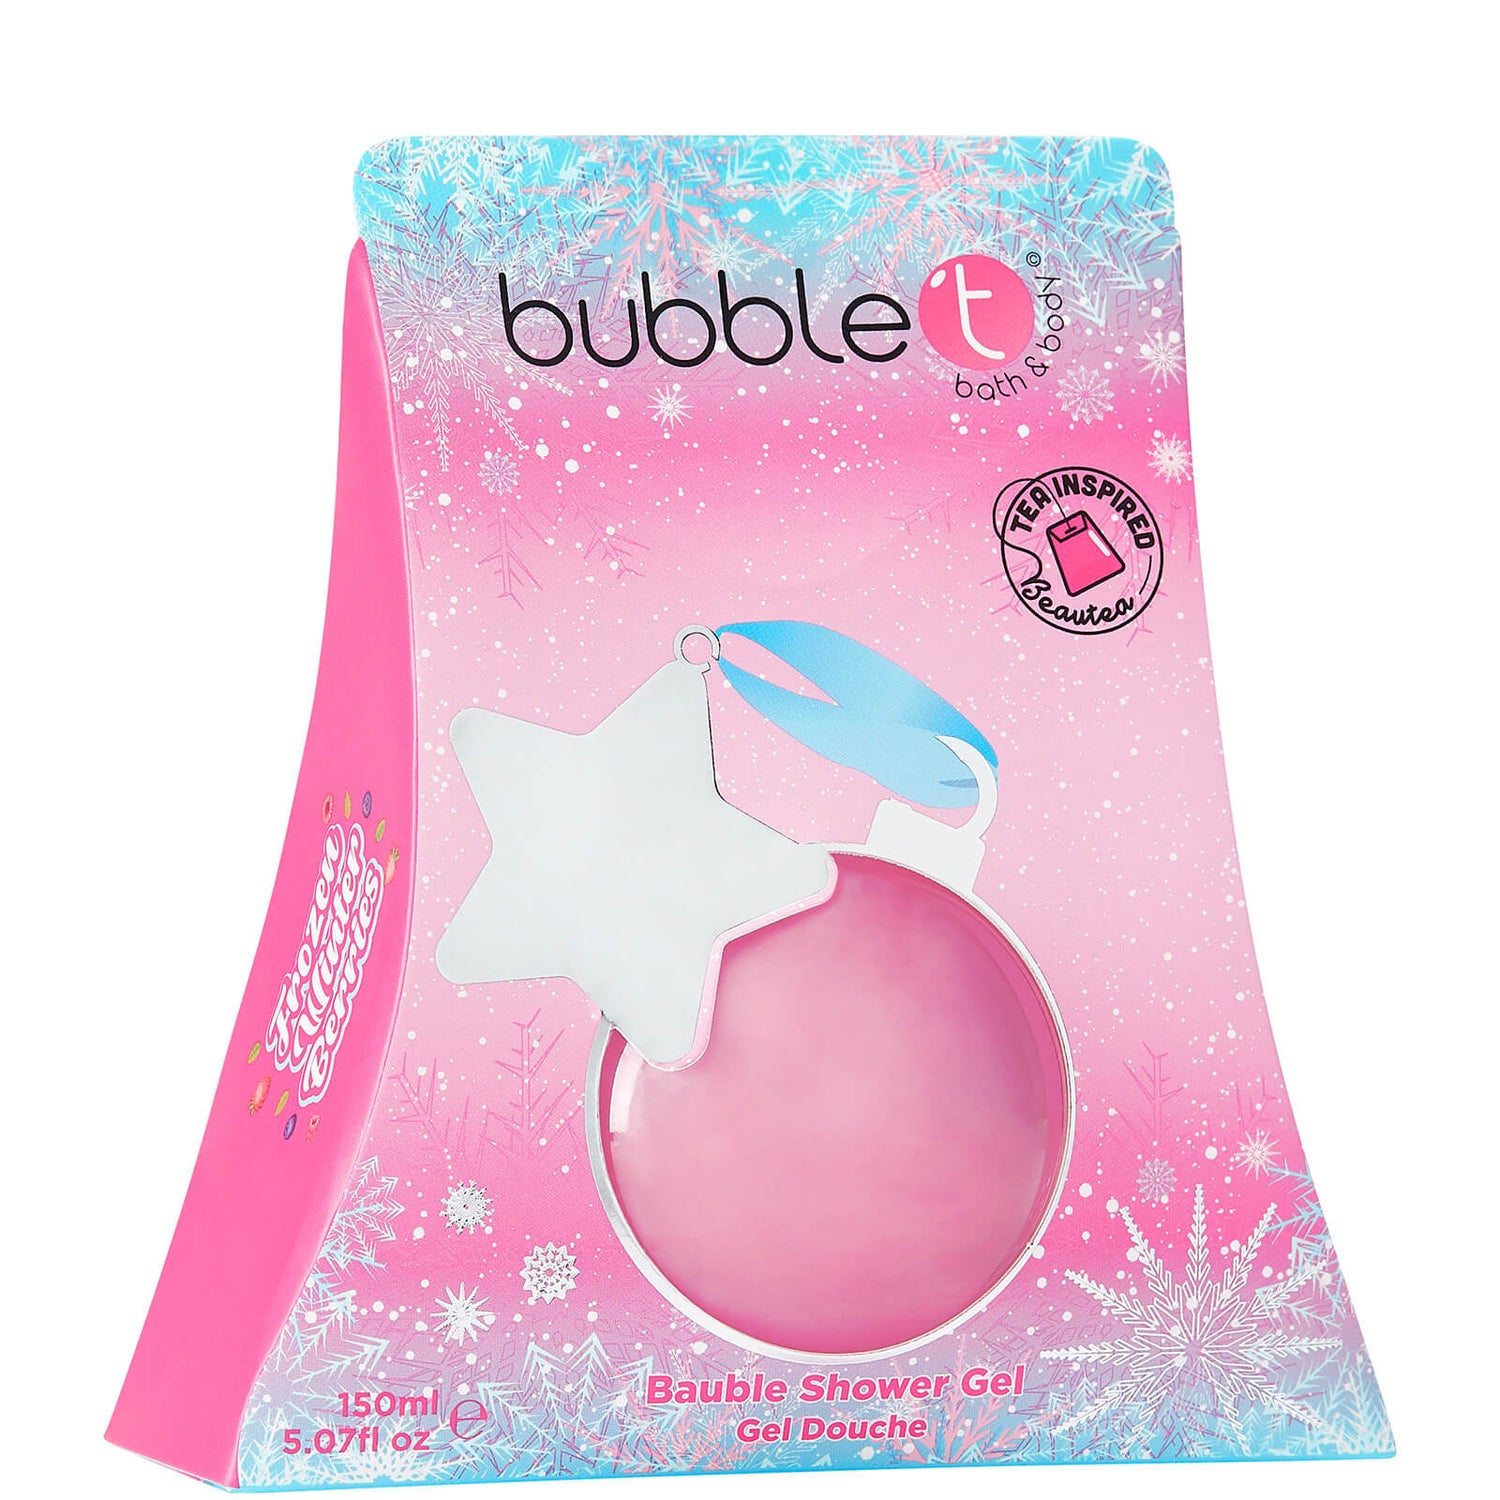 Bubble T Cosmetics Frozen Winter Berries Bath and Shower Bauble